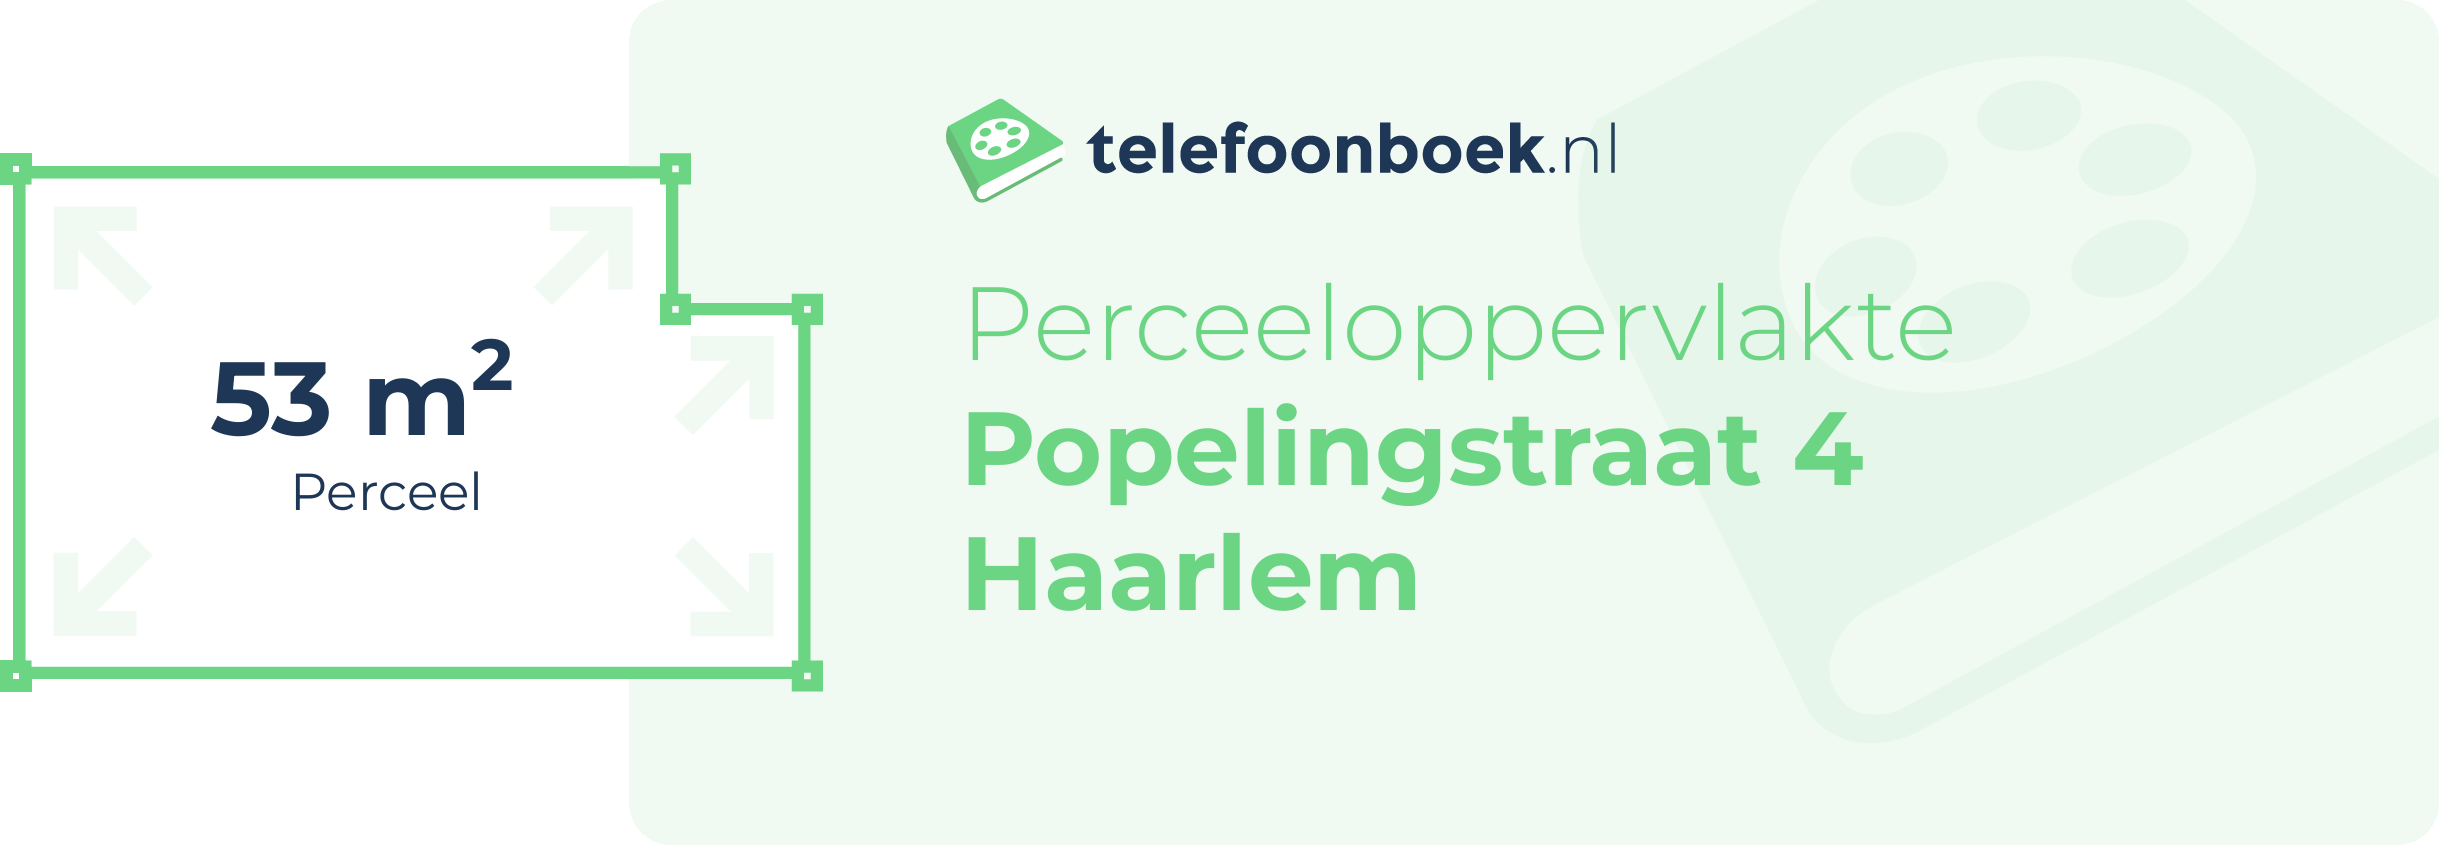 Perceeloppervlakte Popelingstraat 4 Haarlem